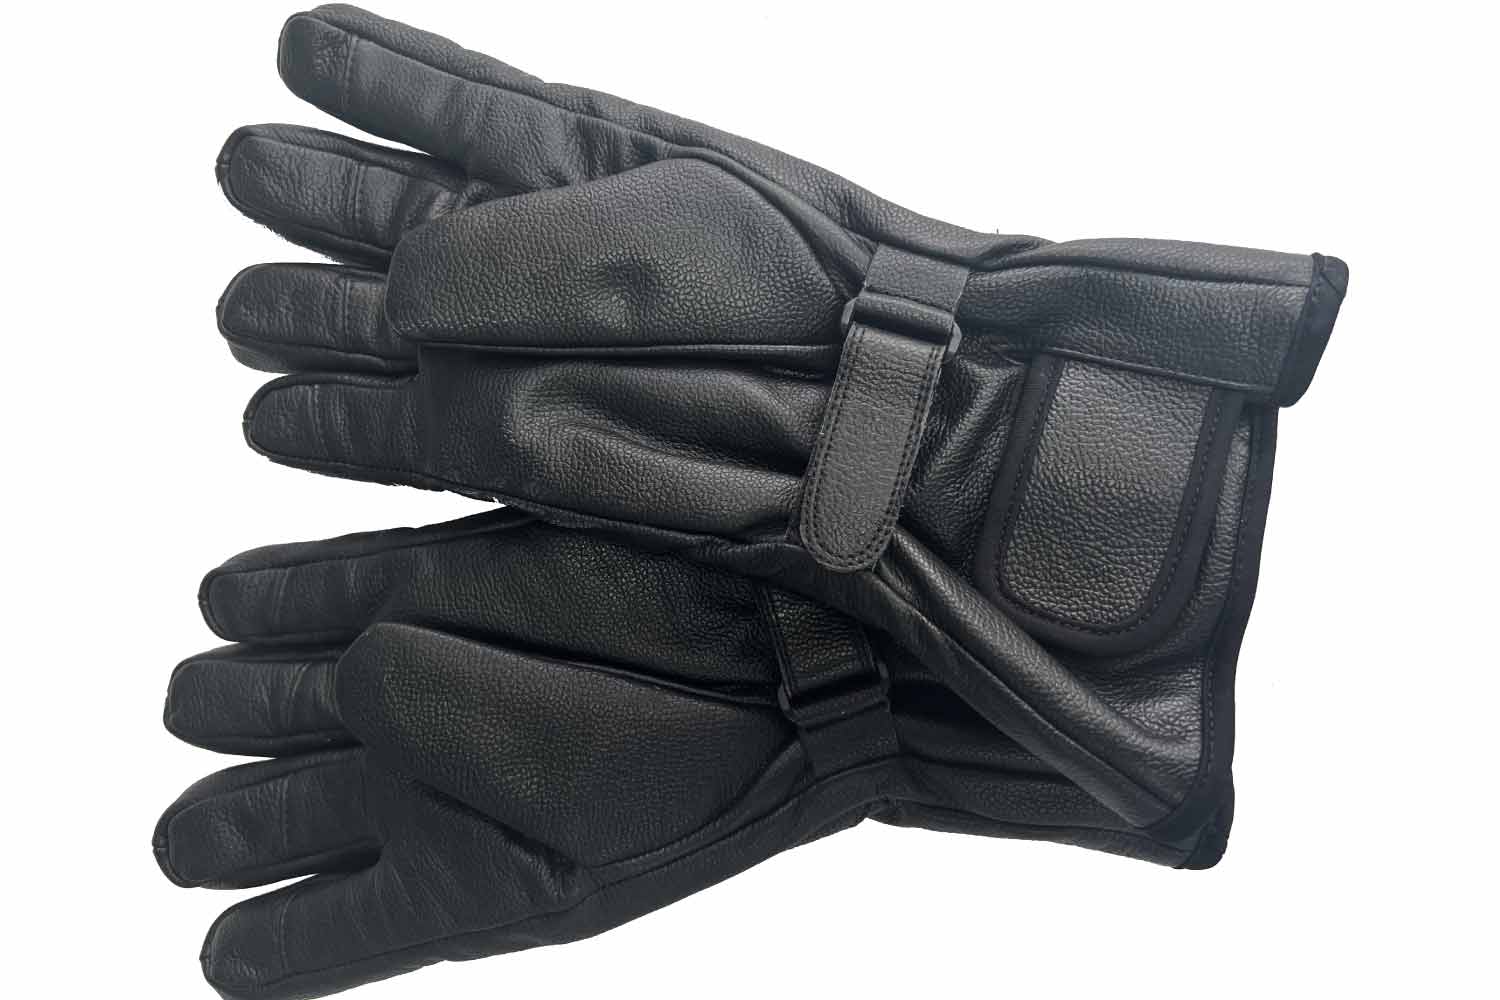 Knuckle Armor Heated Gloves | Gen-X4